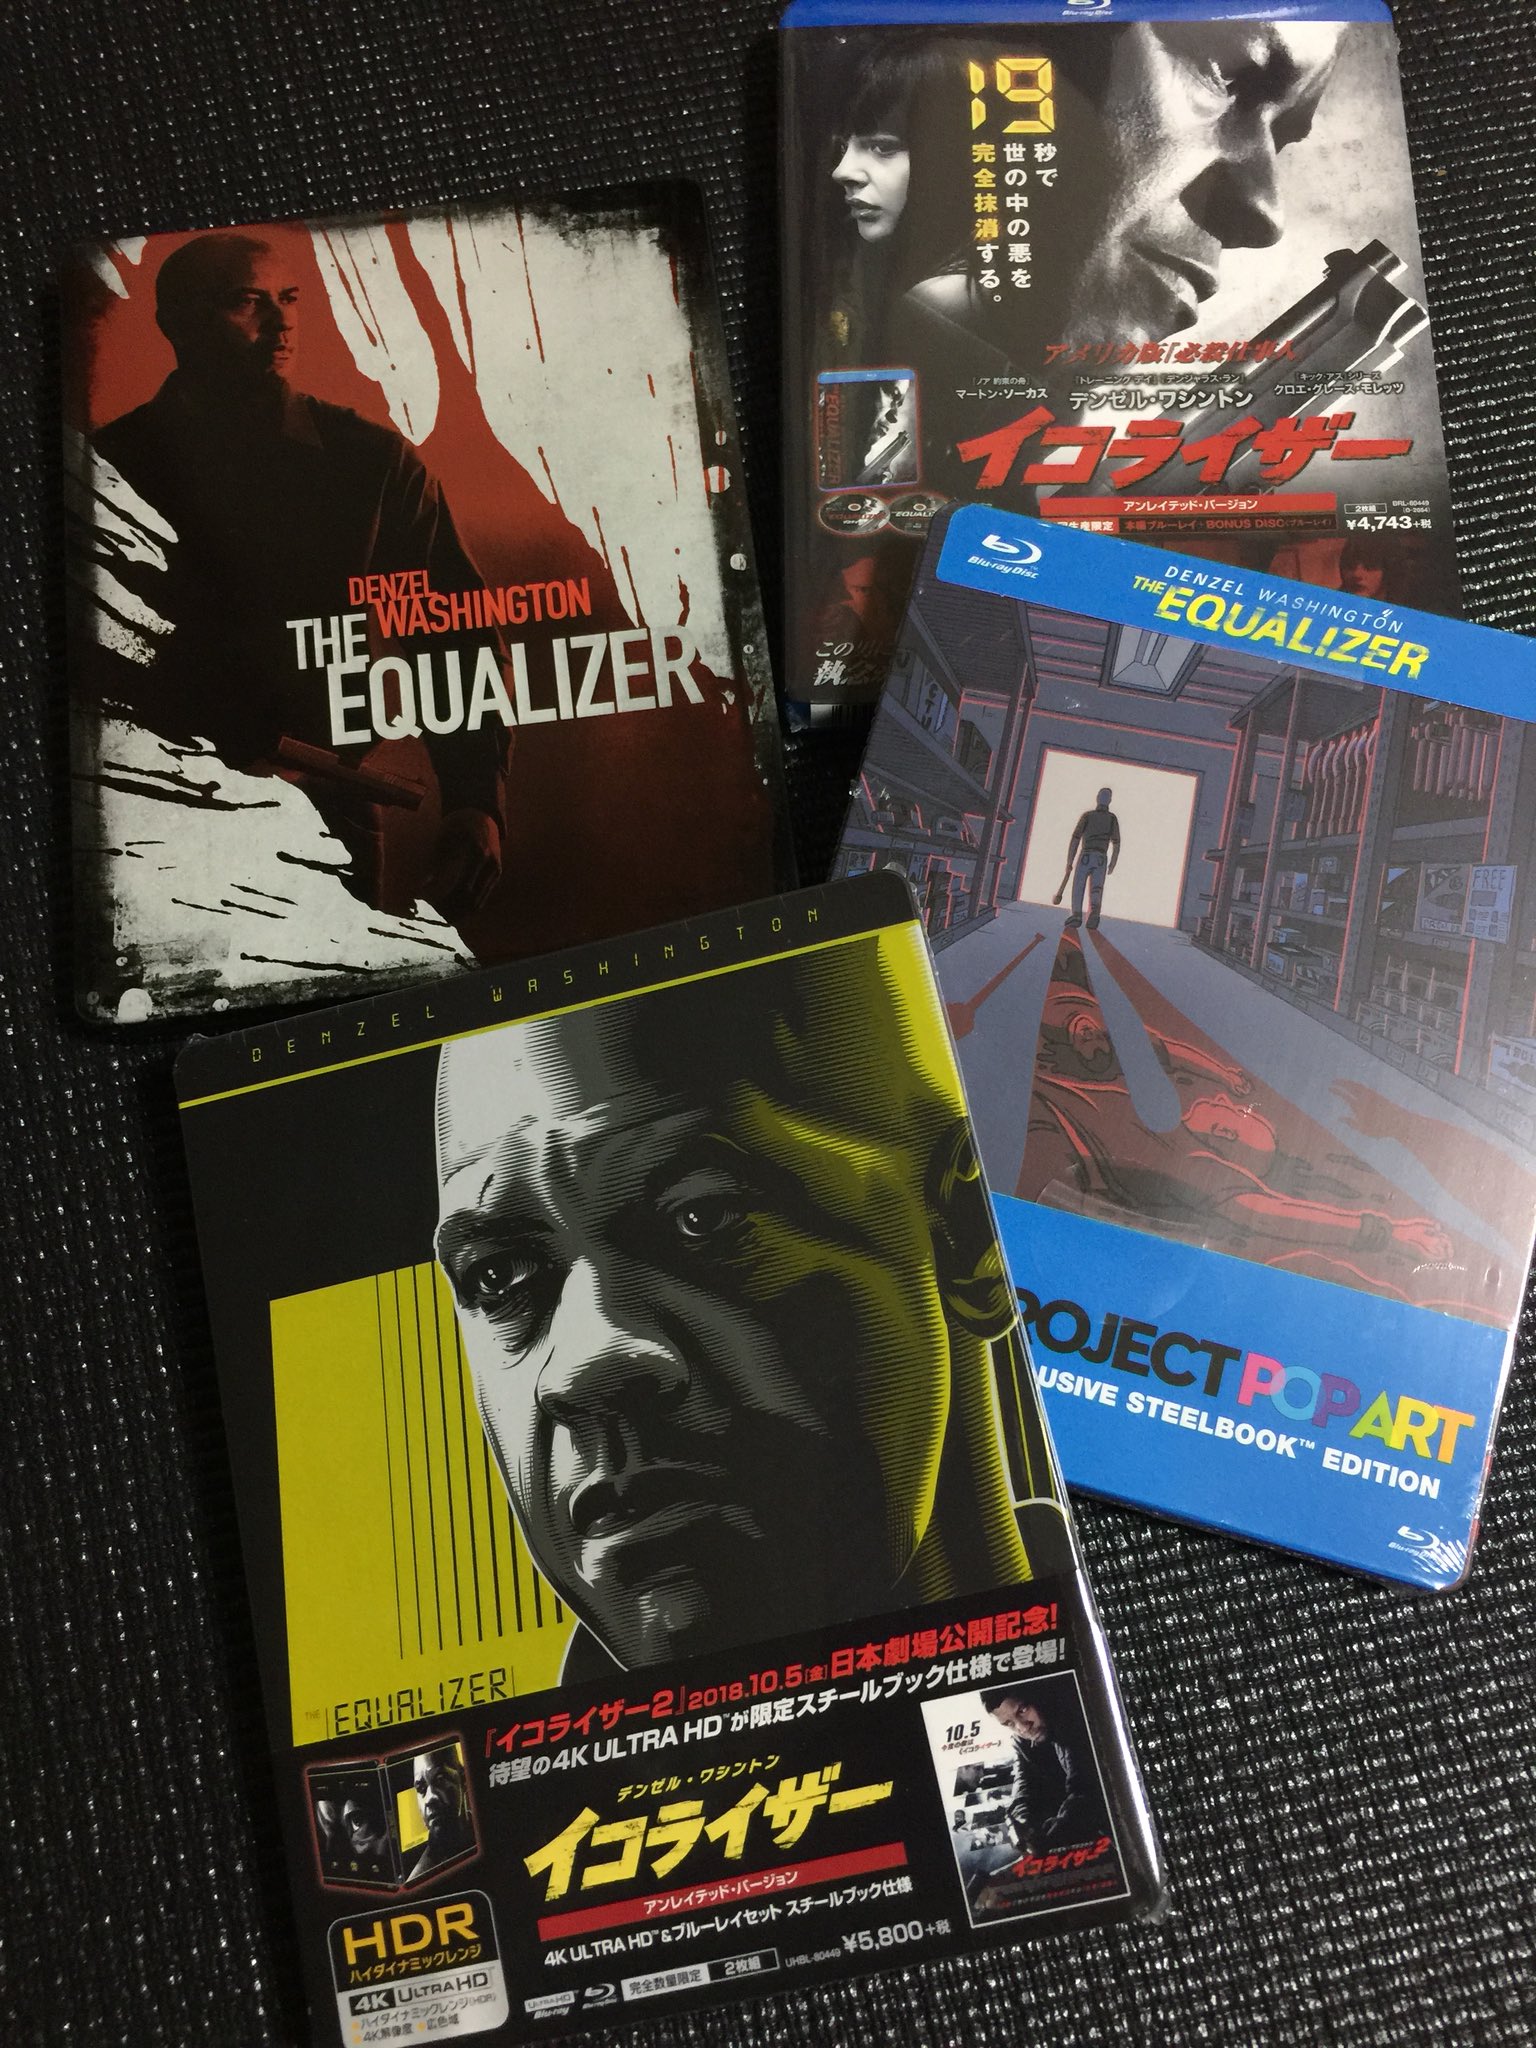 The Equalizer 4k 2d Blu Ray Steelbook [japan] Hi Def Ninja Pop Culture Movie Collectible